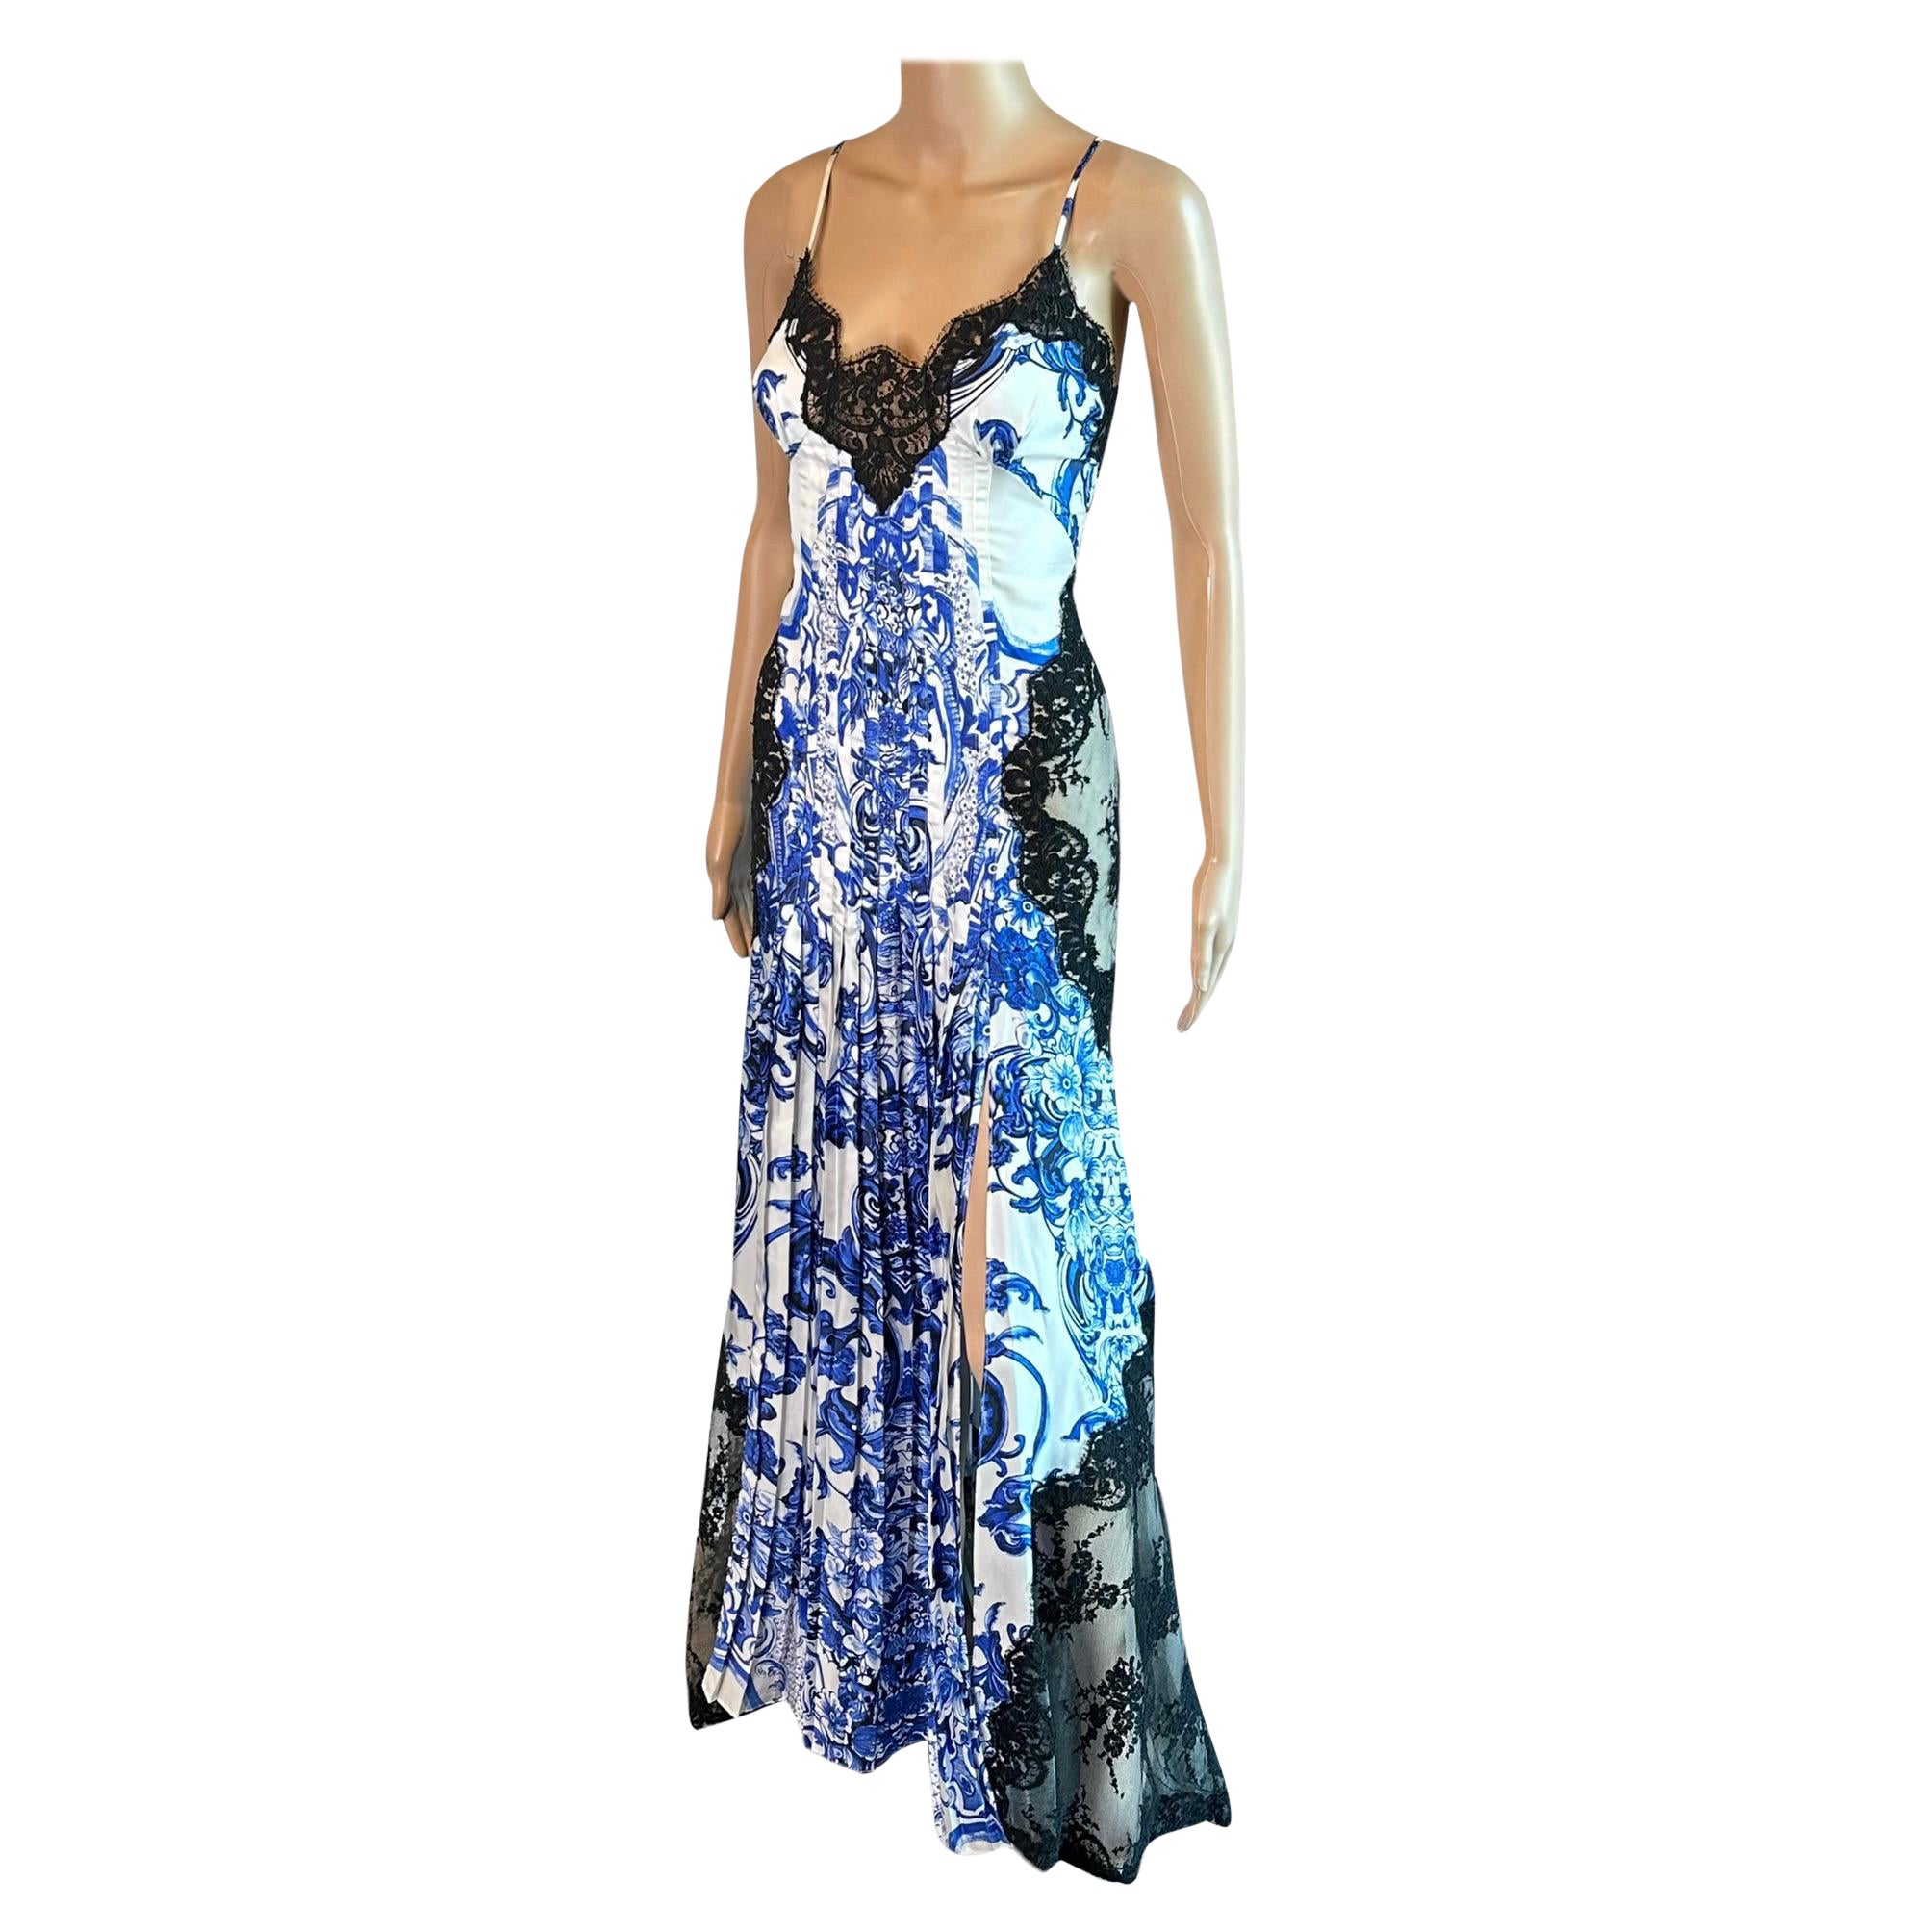 Roberto Cavalli Resort 2013 Chinoiserie Ming Porcelain Sheer Lace Evening Dress